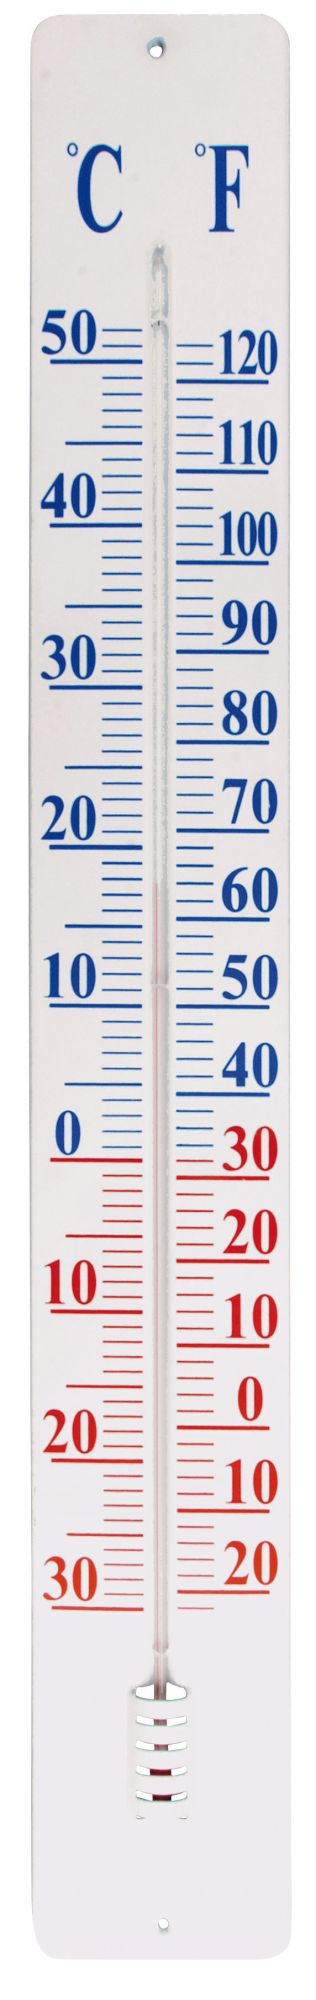 https://www.danto.de/out/pictures/master/product/1/esschert-design-thermometer-temperaturmesser-anzeige-in-celsius-ca-12-cm-x-90-cm-TH9_01.jpg